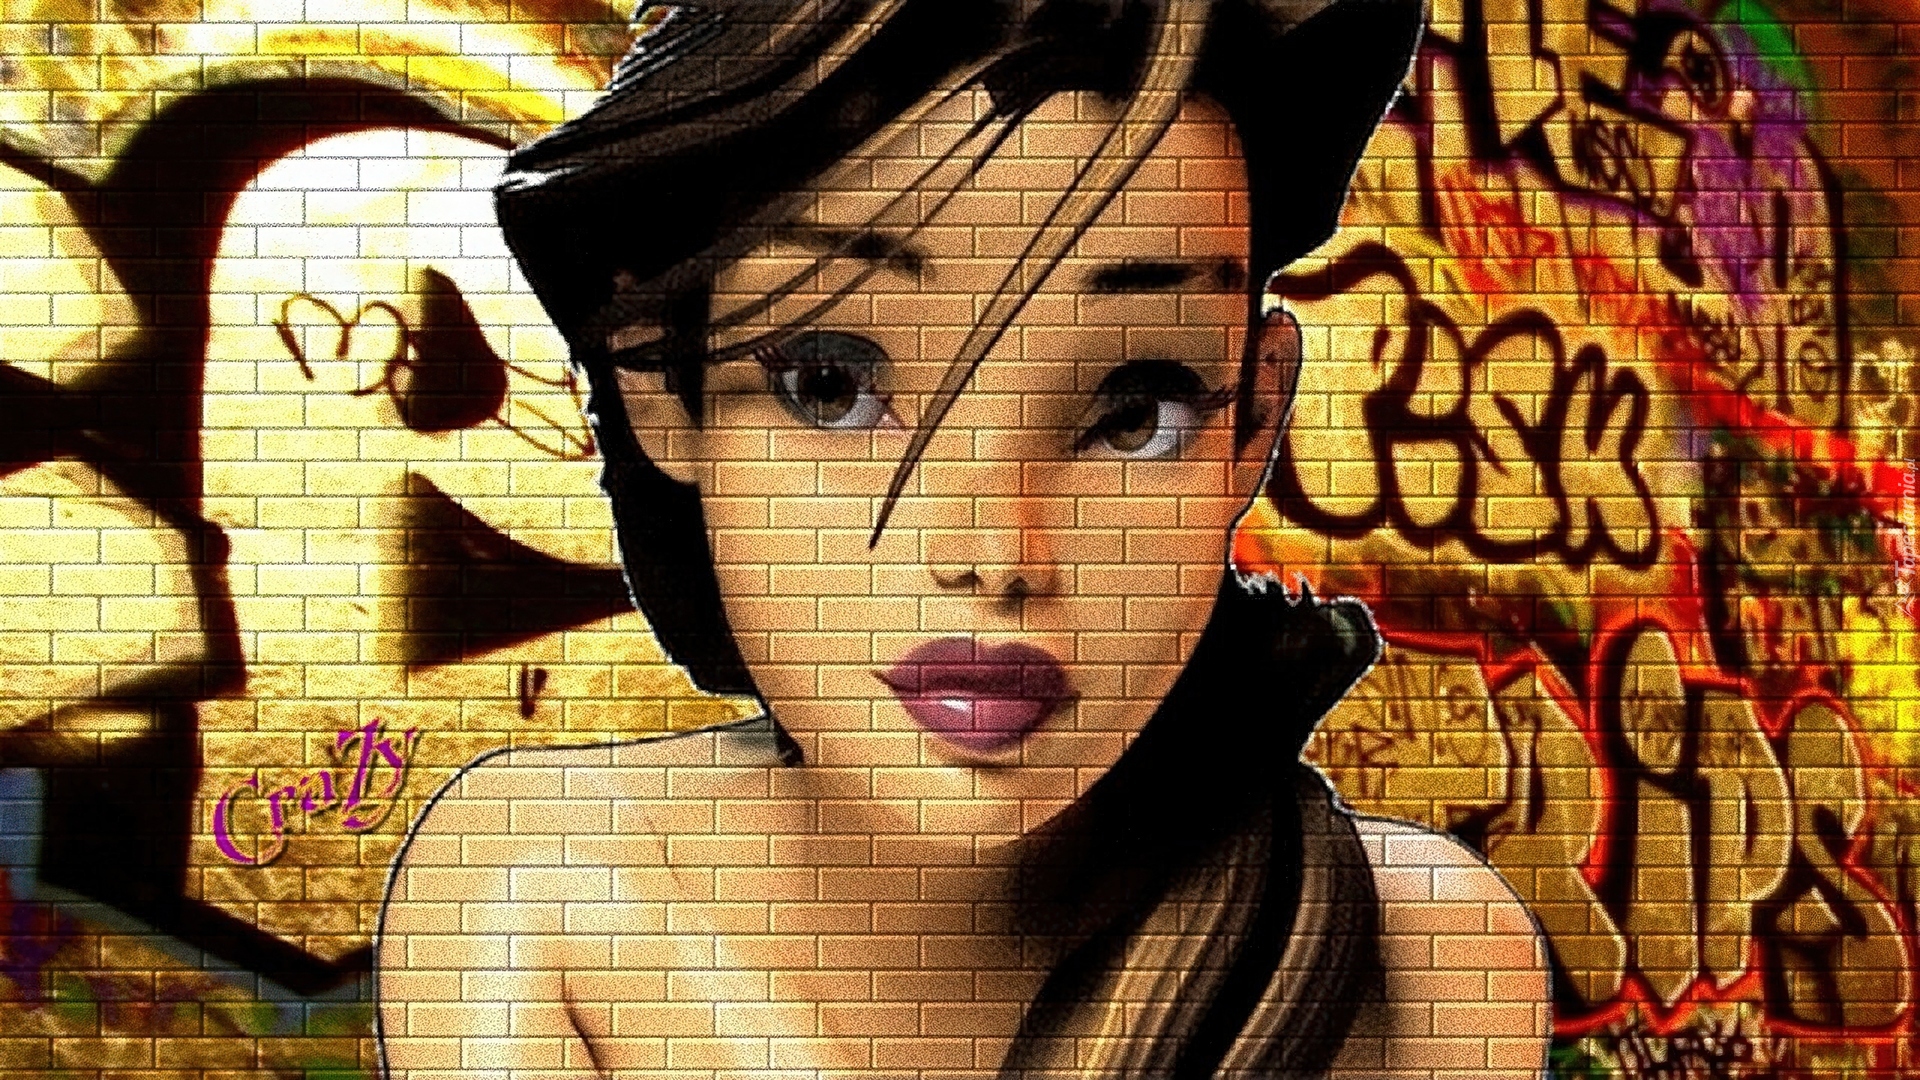 Kobieta, Ściana, Mural, Street art